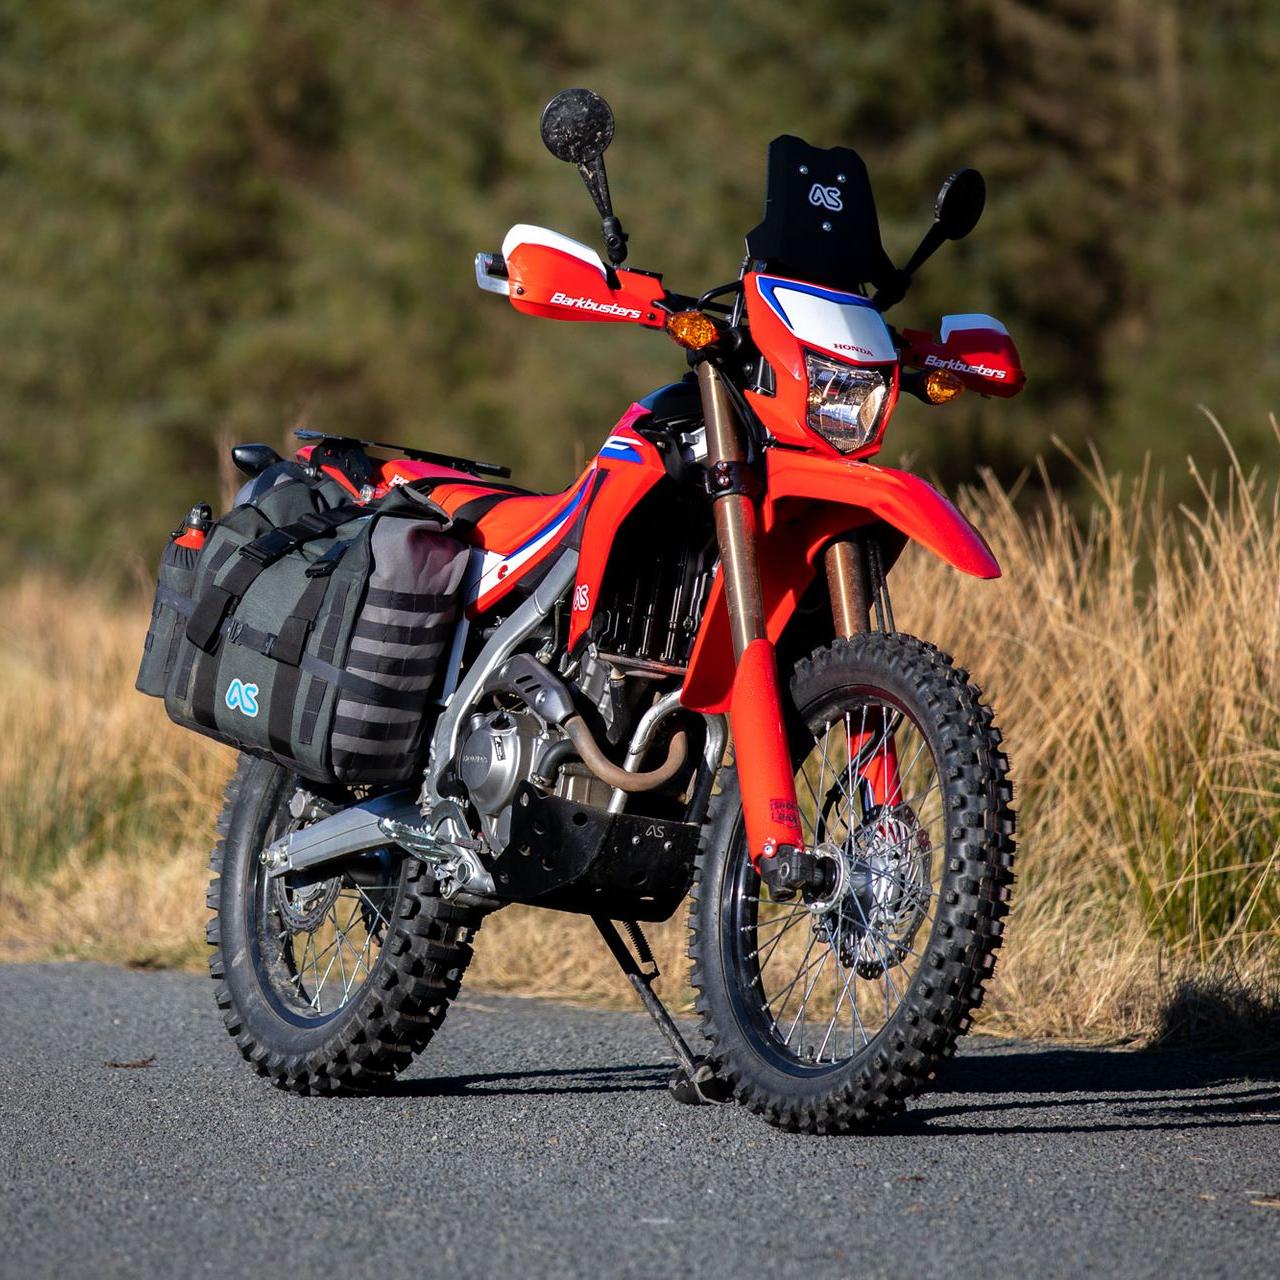 Adventure Spec Honda CRF300L Mini Fairing Support adv off roading kit build motorbike motorcycle universal easy fit